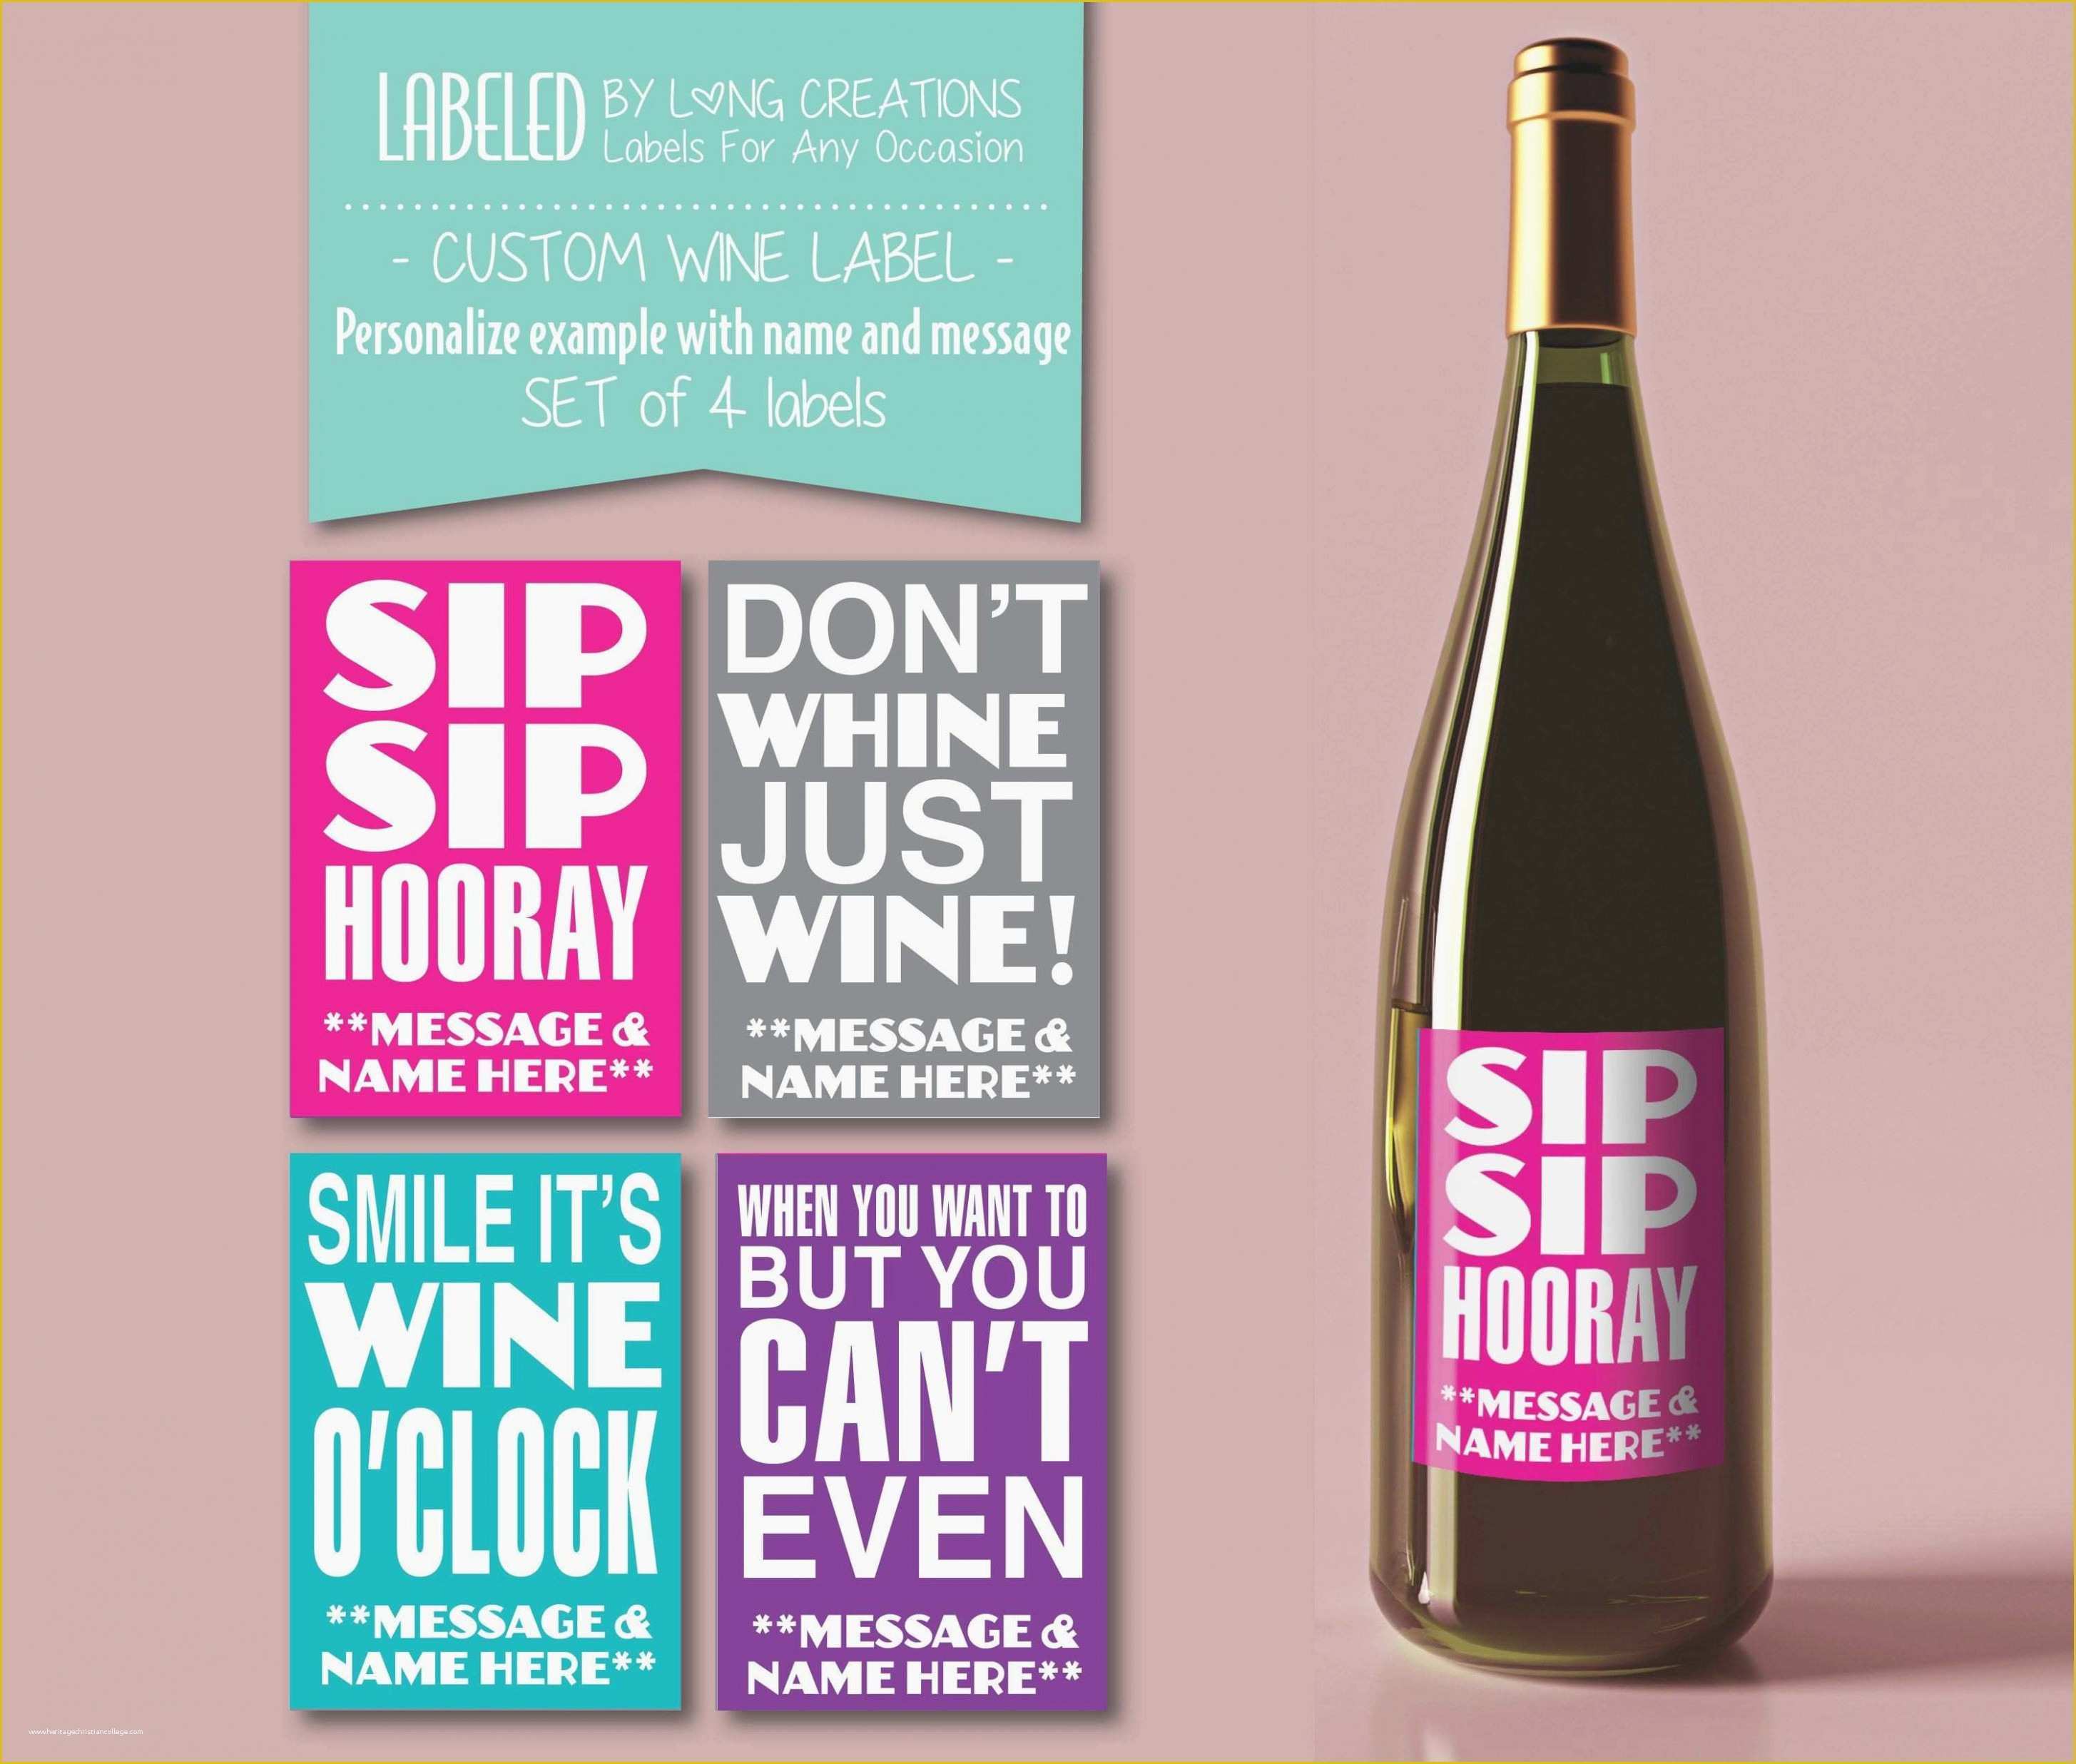 Liquor Bottle Label Templates Free Of why Free Custom Wine Label